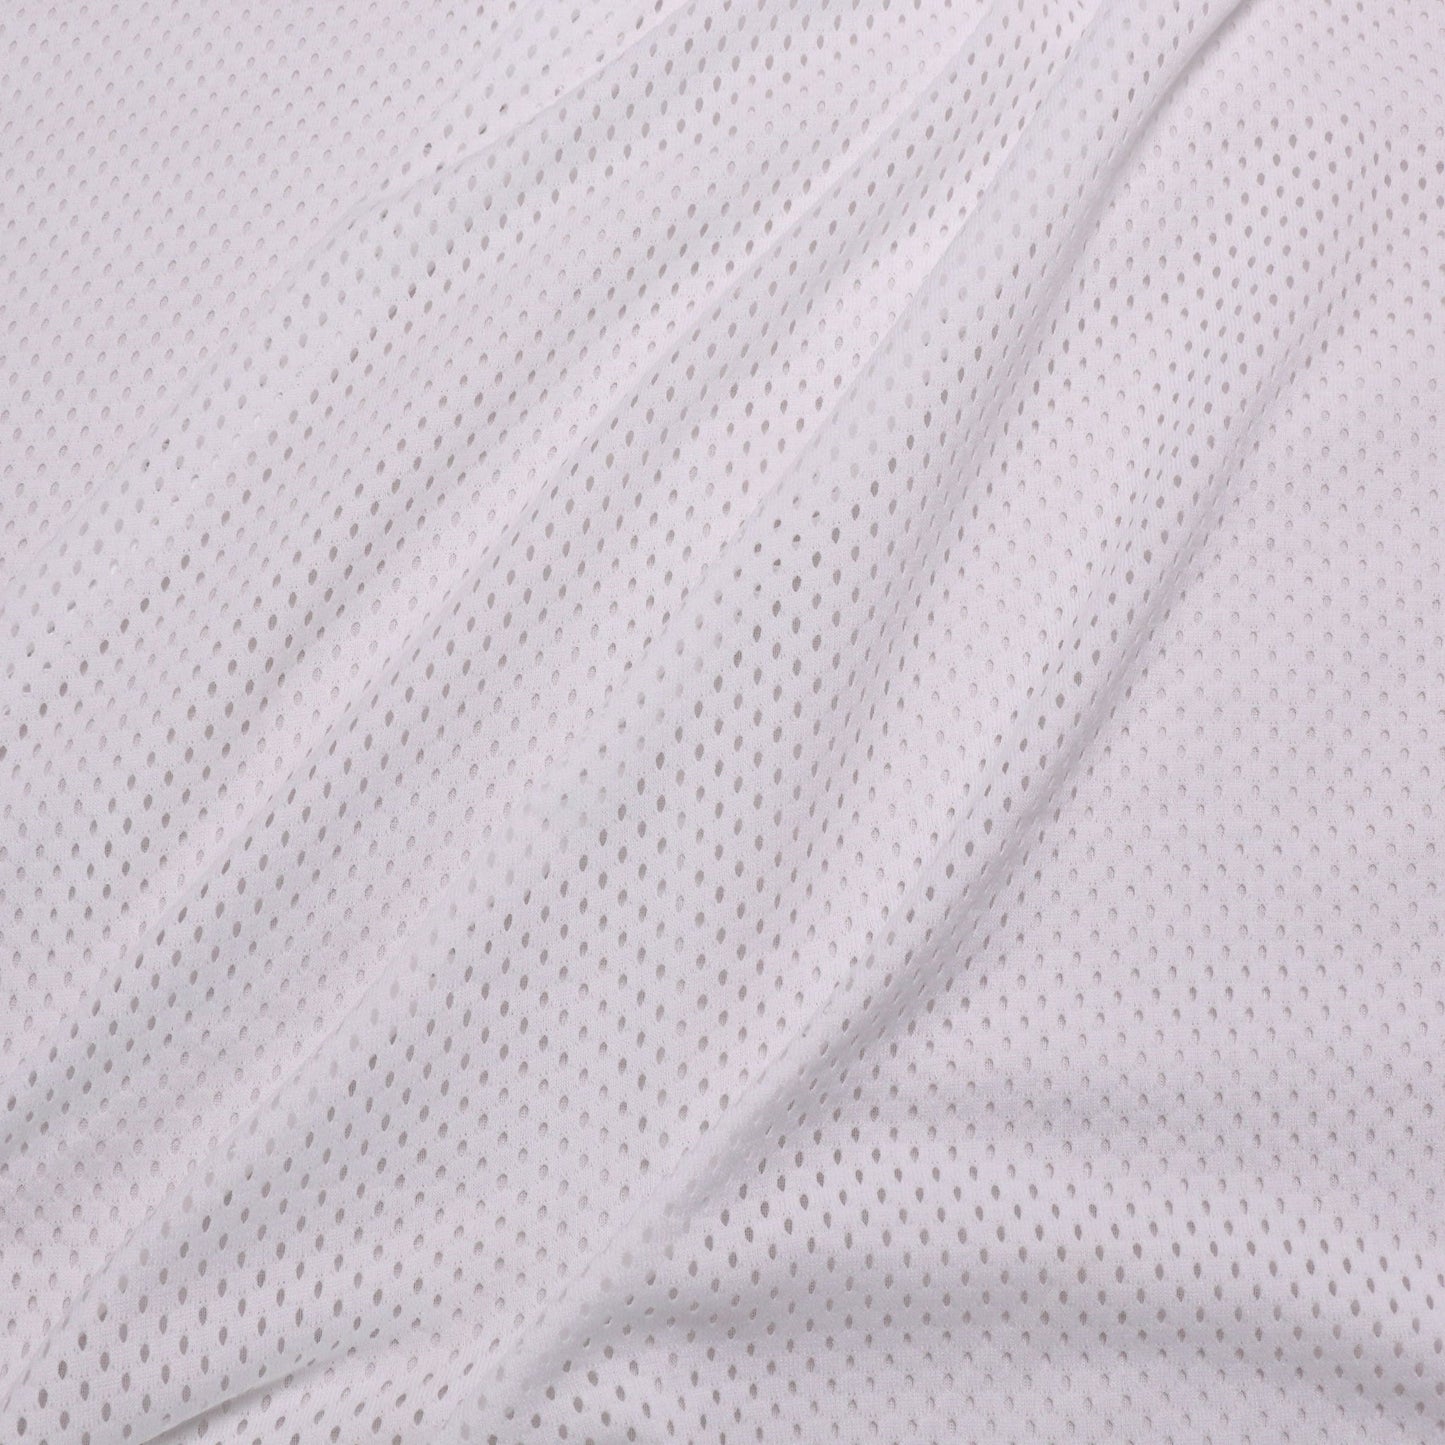 white airtex mesh sports fabric for dressmaking crafting